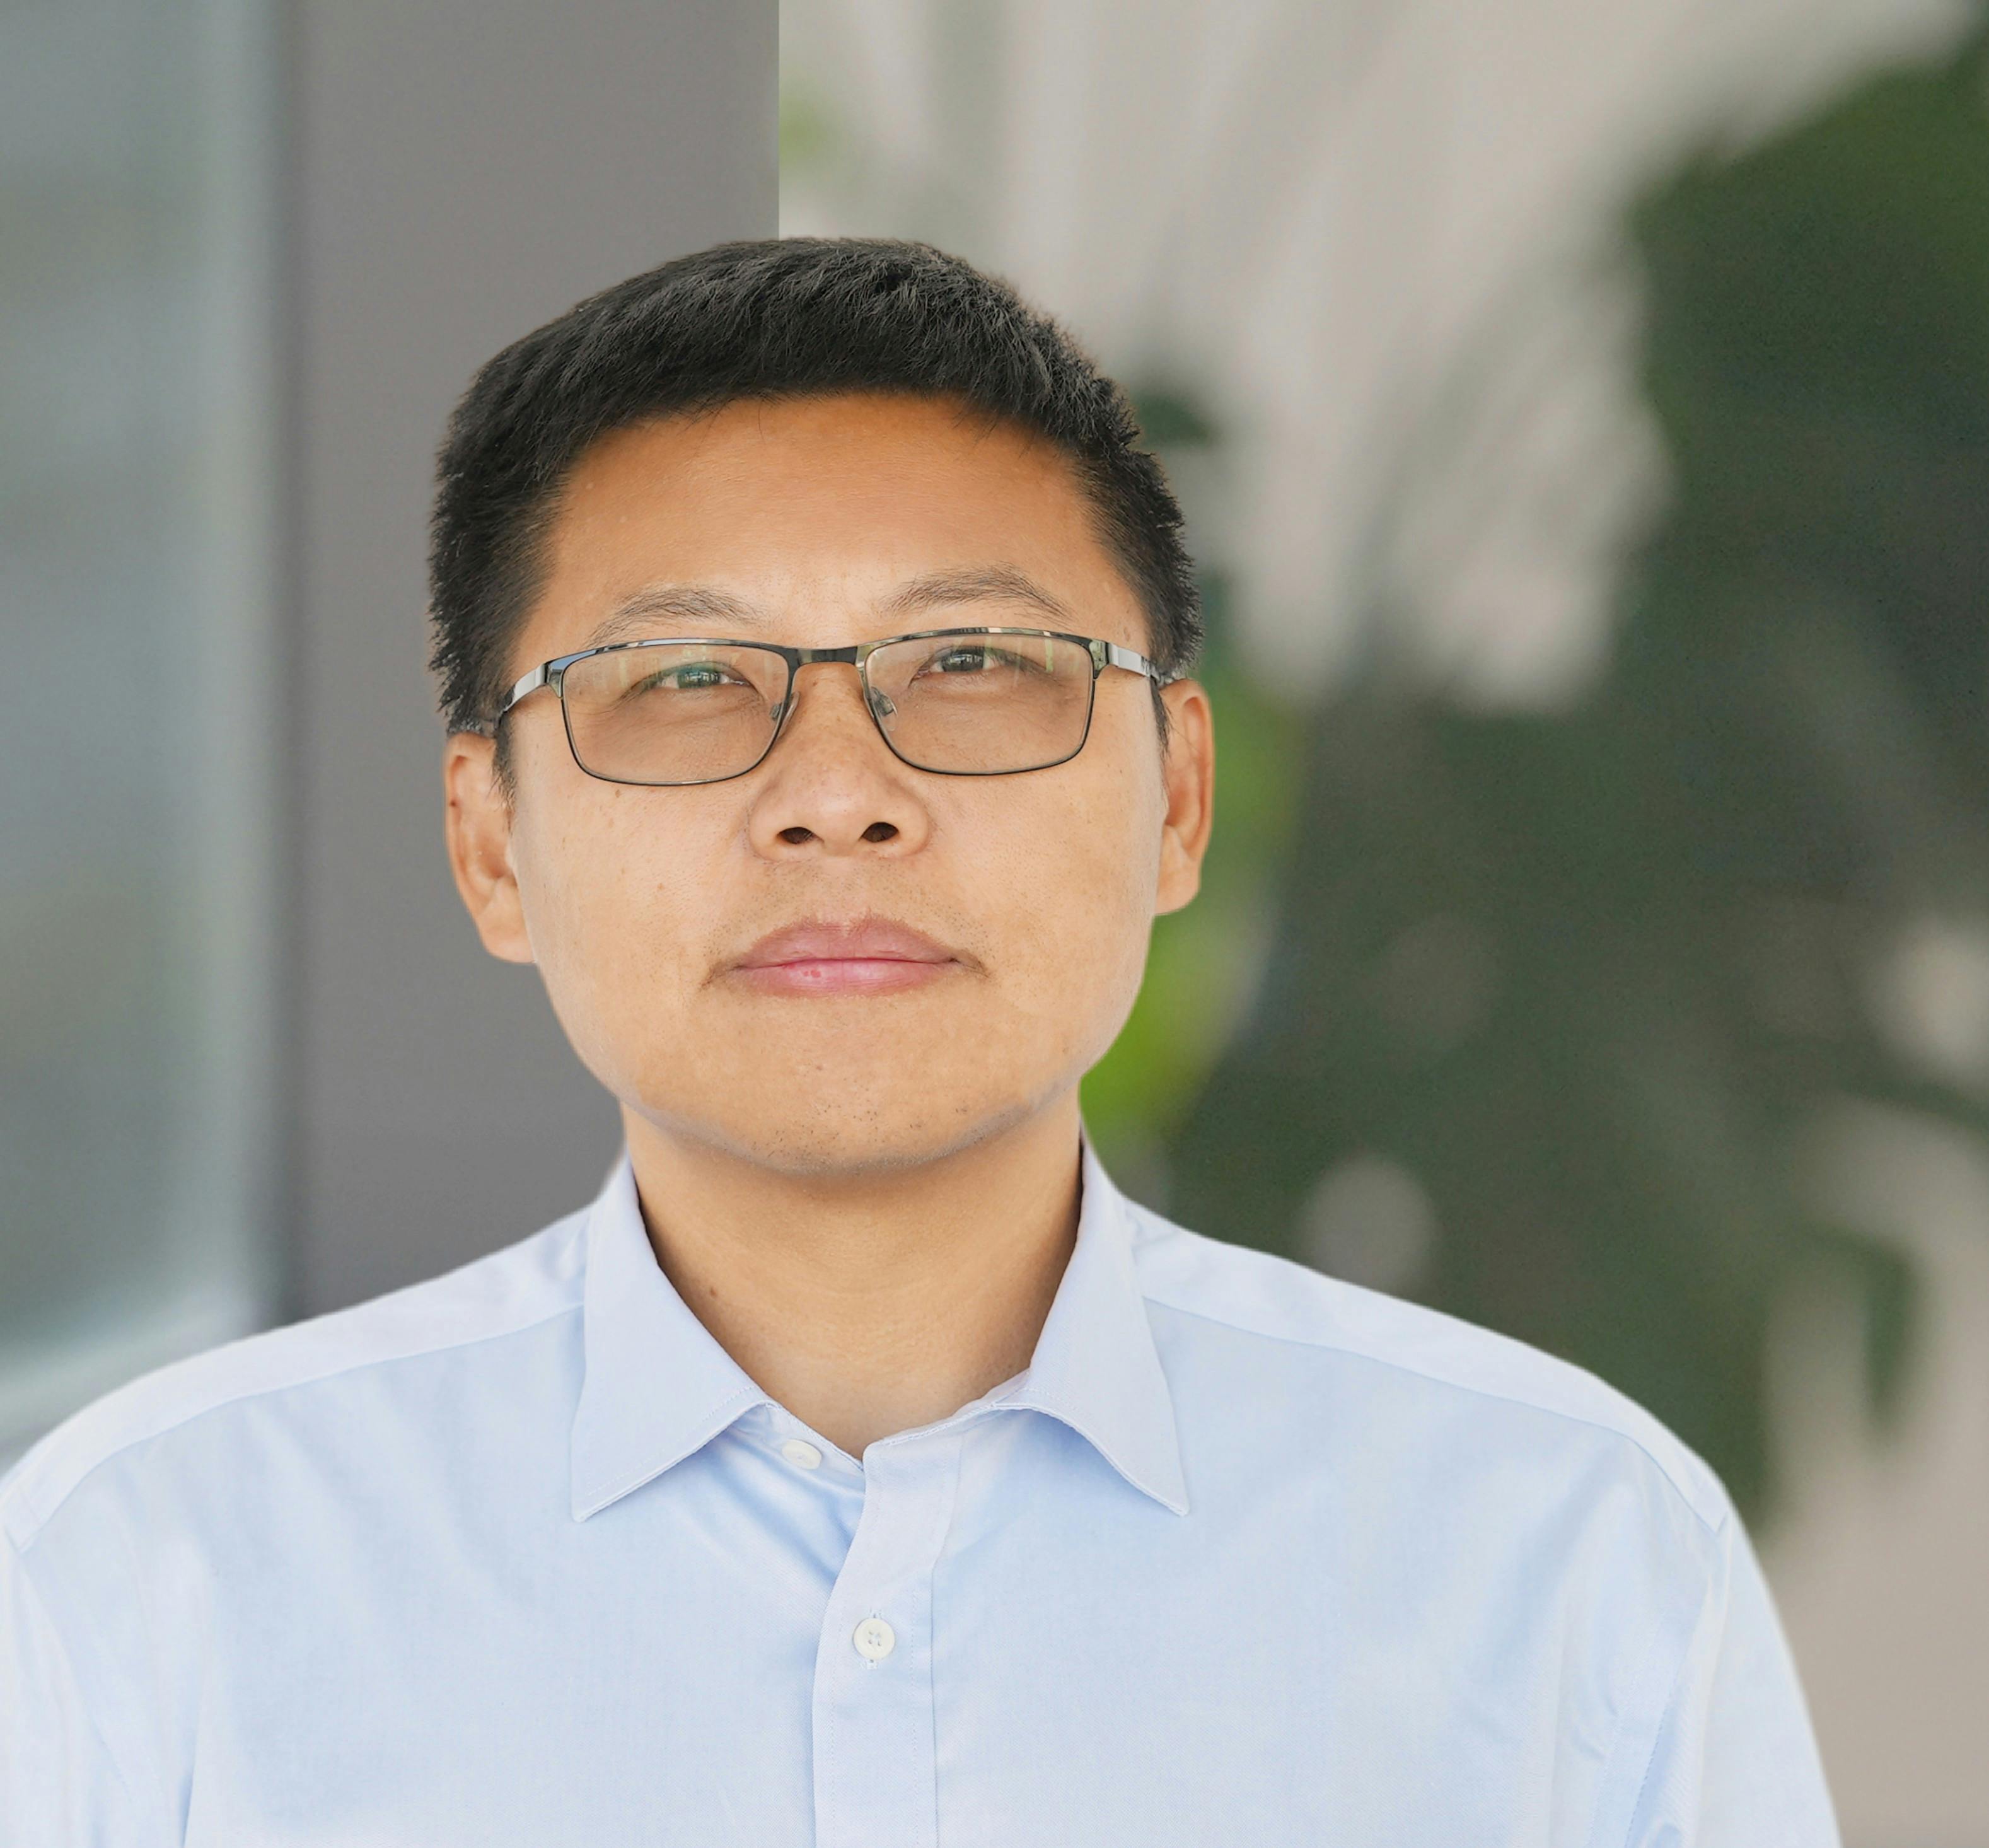 Portrait of Yefei Peng, Plus VP of Data